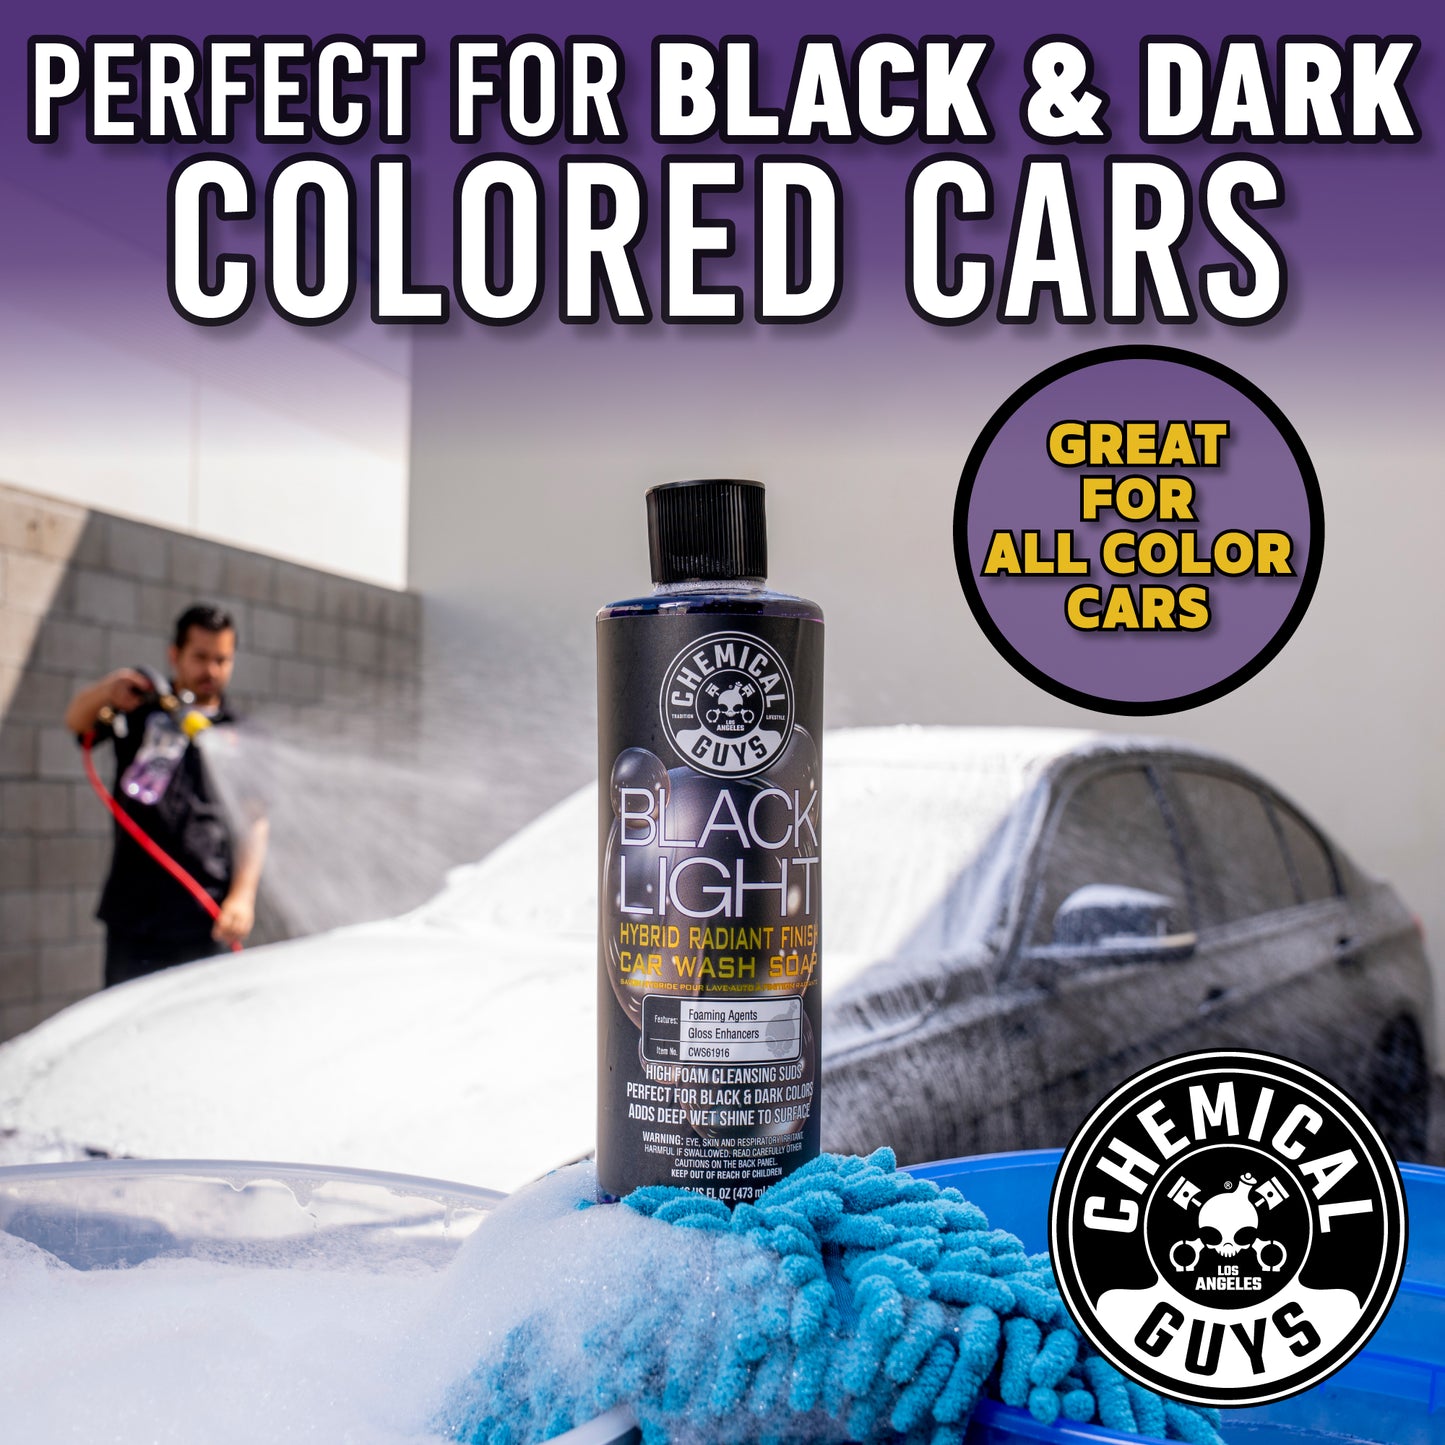 BLACK LIGHT Car Wash Soap